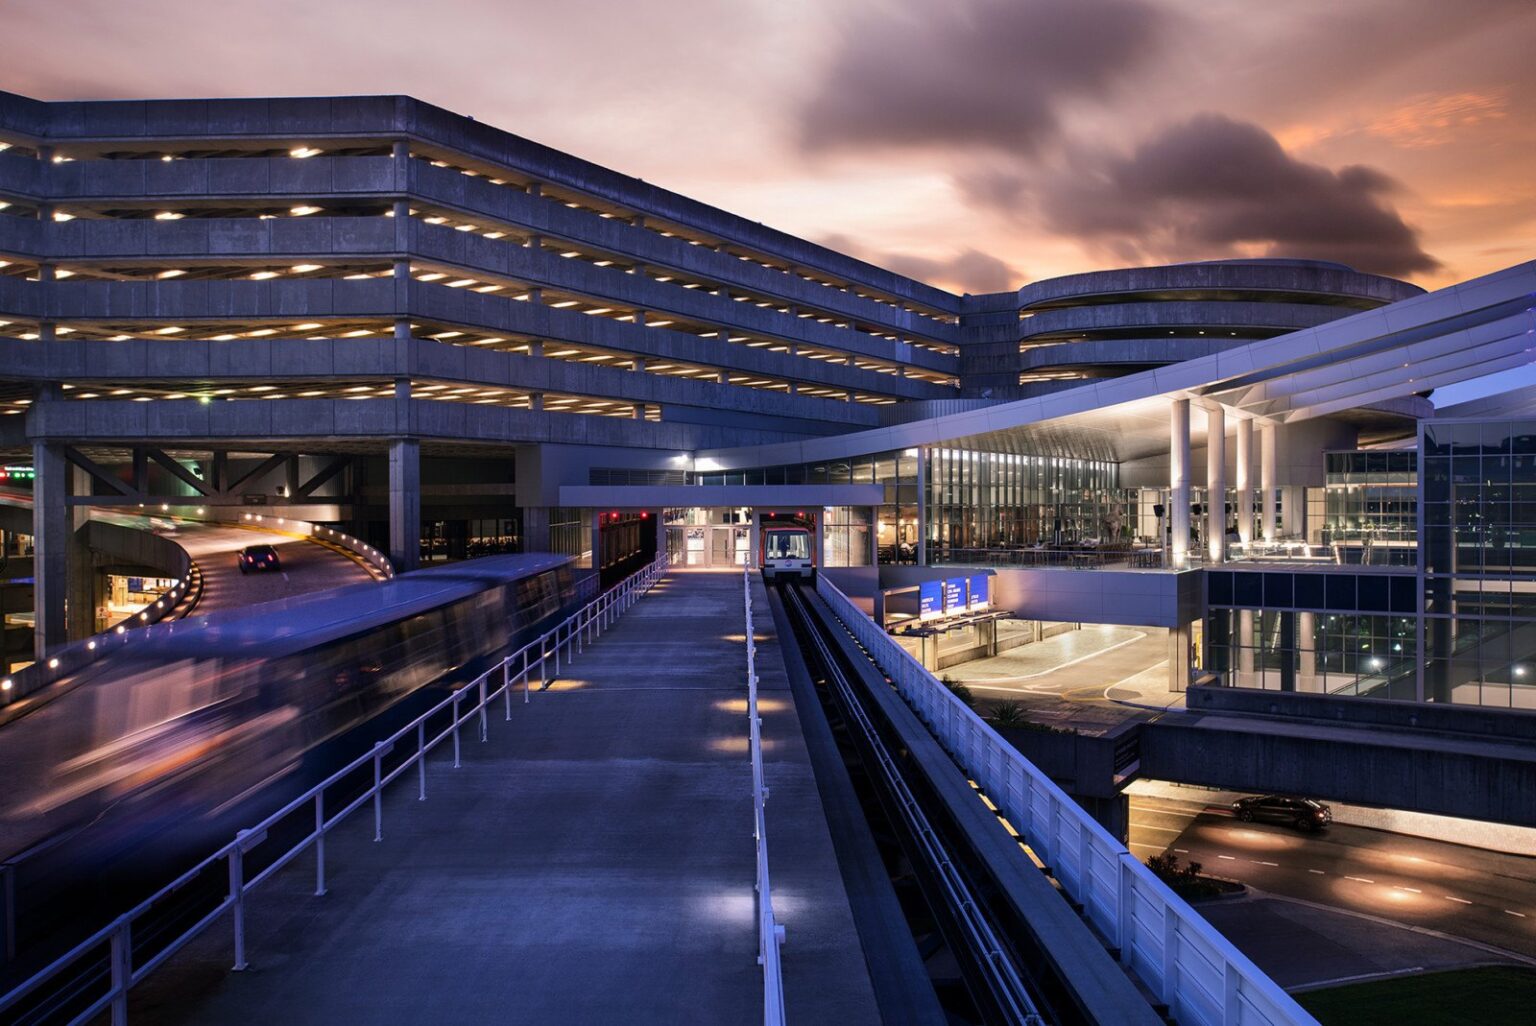 Tampa International Airport Expansion Exterior 1900 1600x1069 1 1536x1026 2